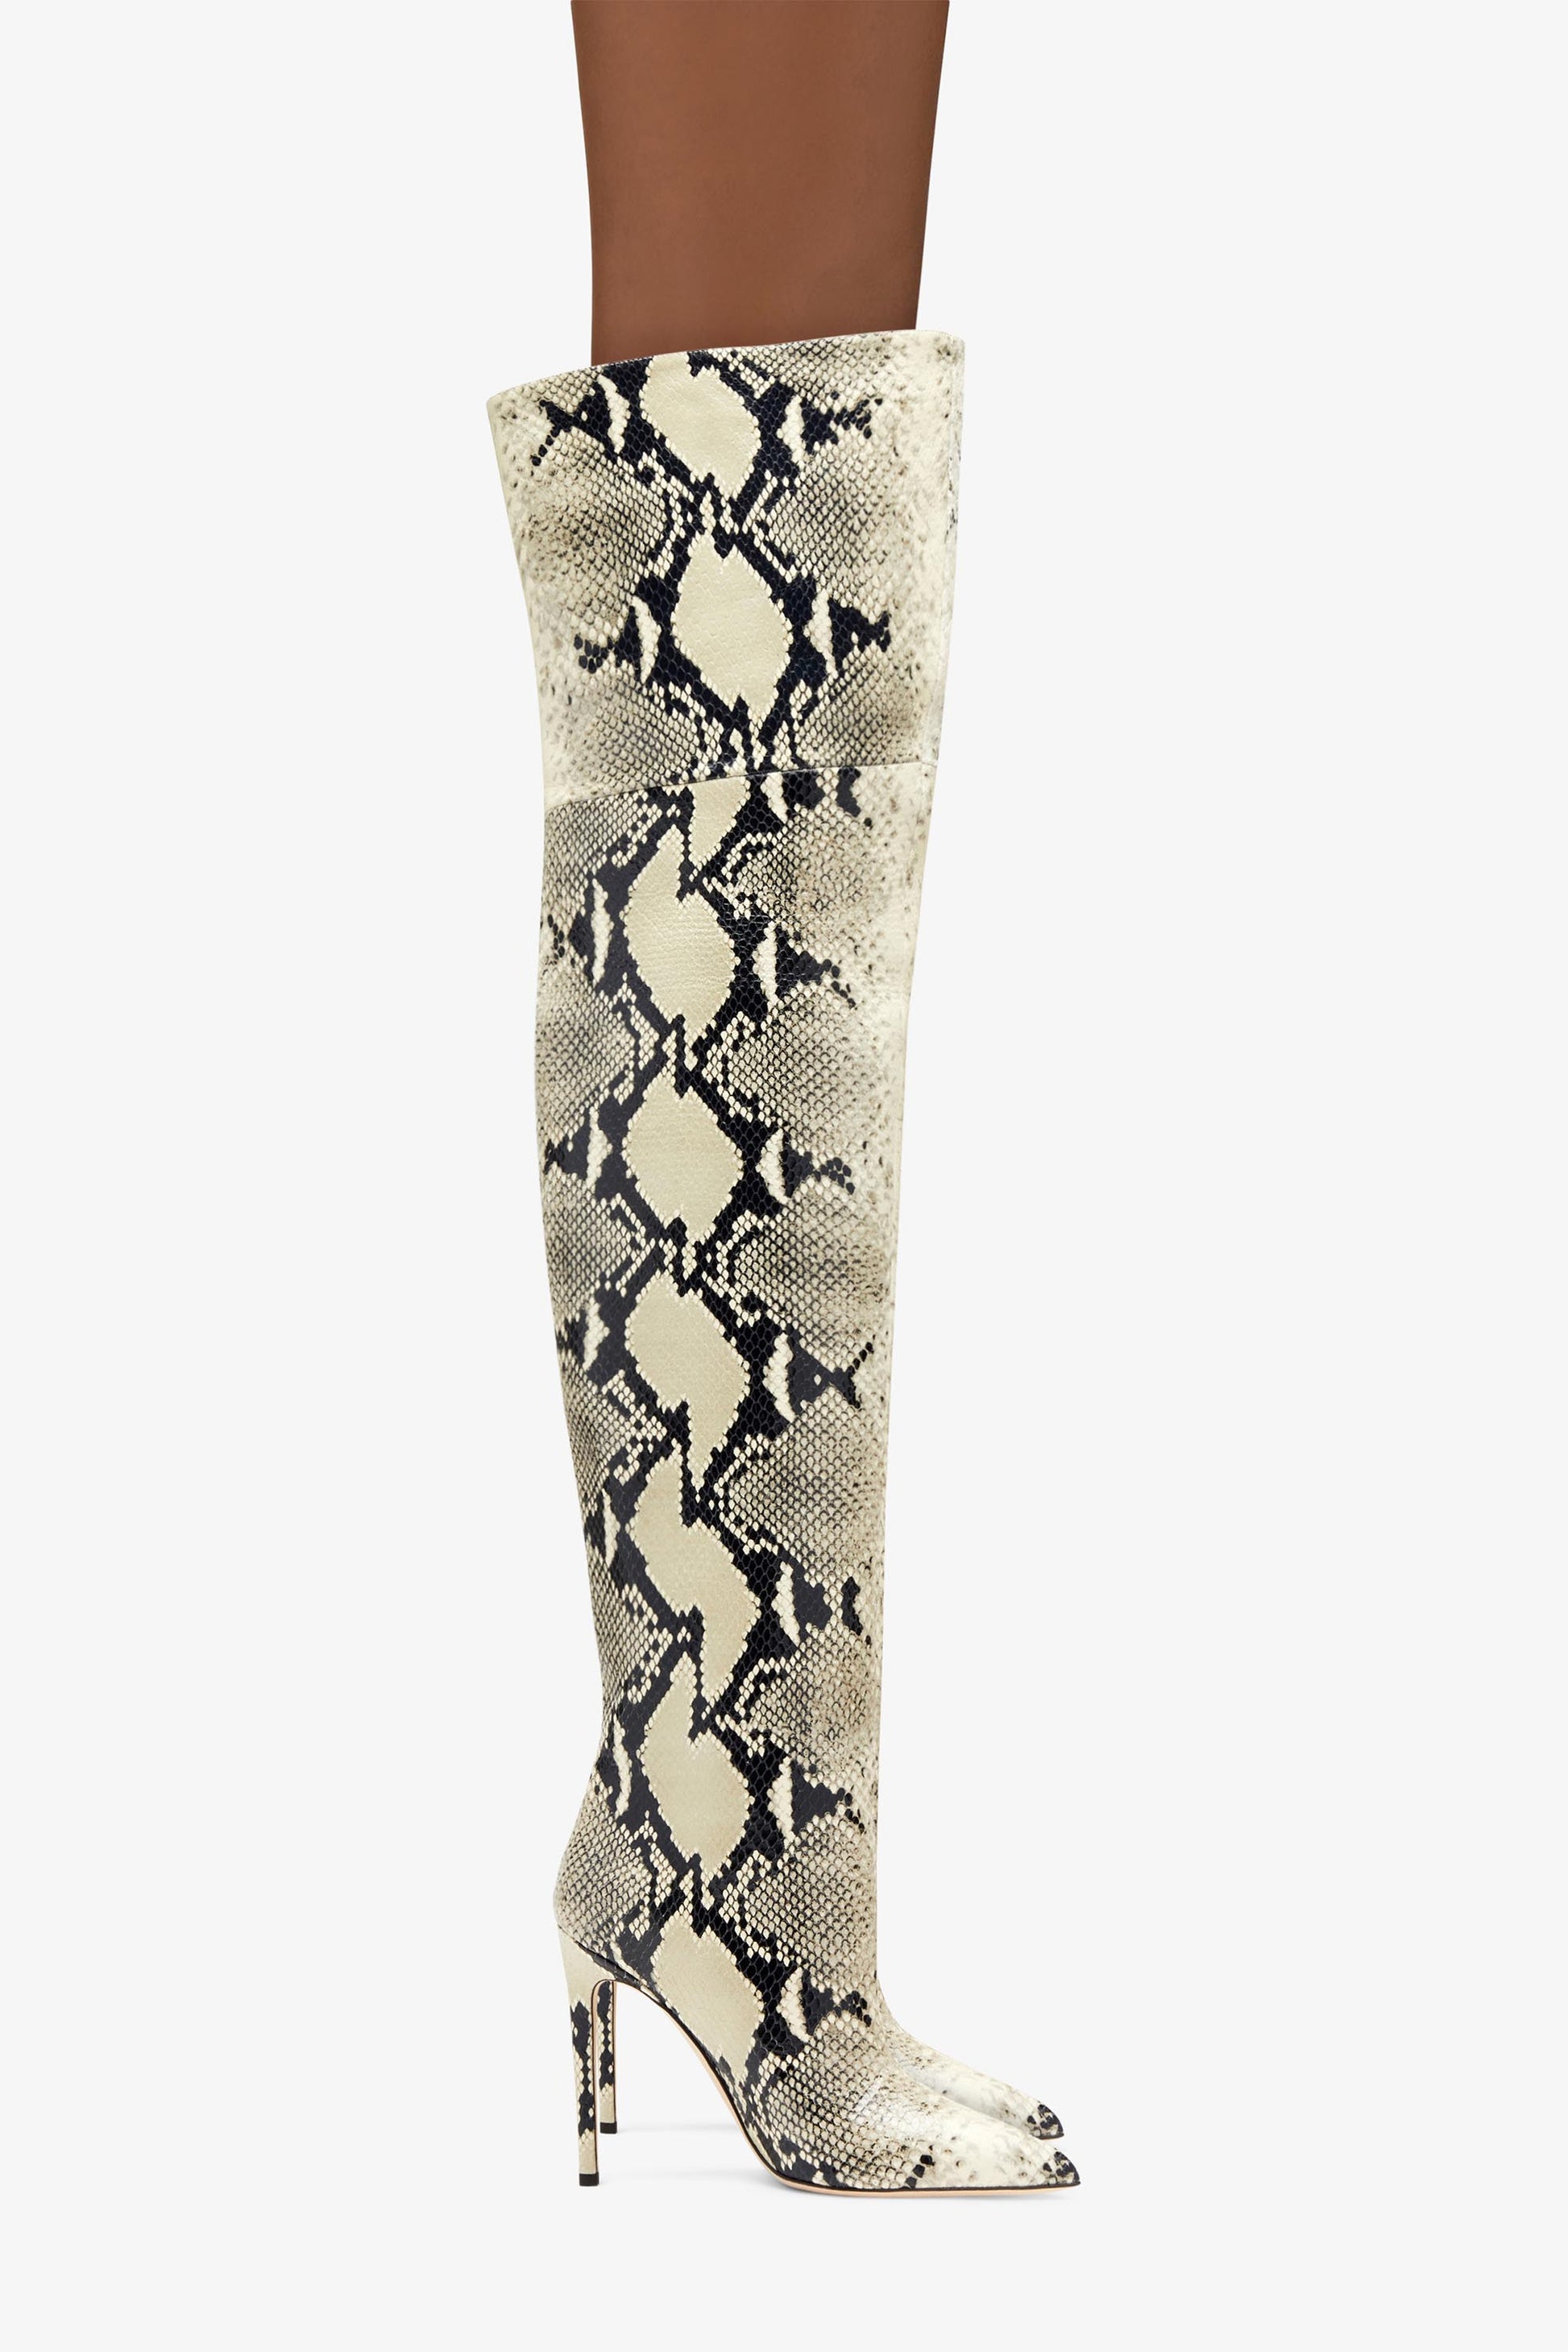 Overknee-Stiletto-Stiefel aus bedrucktem Leder in Python-Optik - Produkt getragen